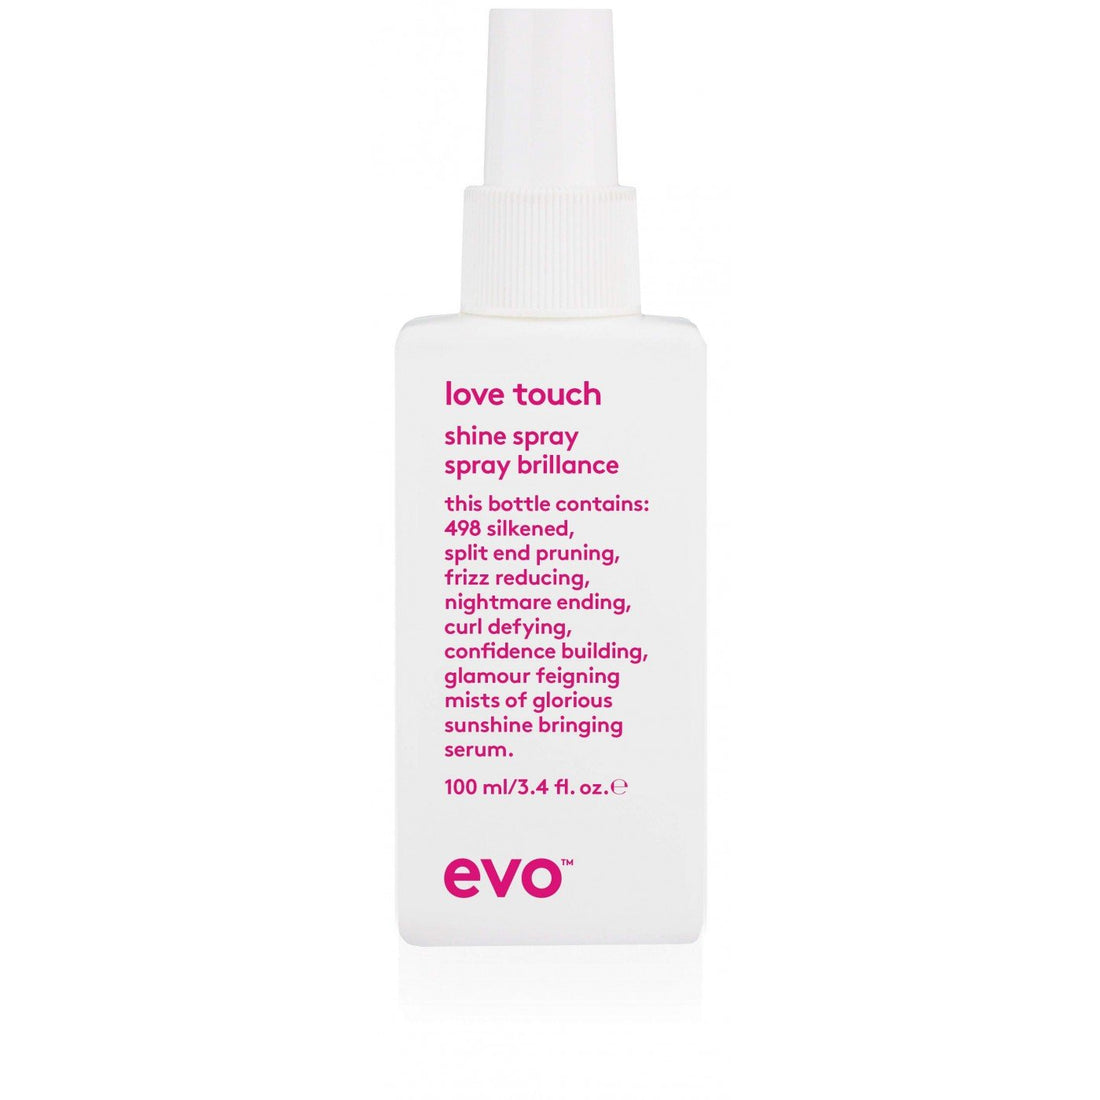 Evo Love Touch Shine Spray